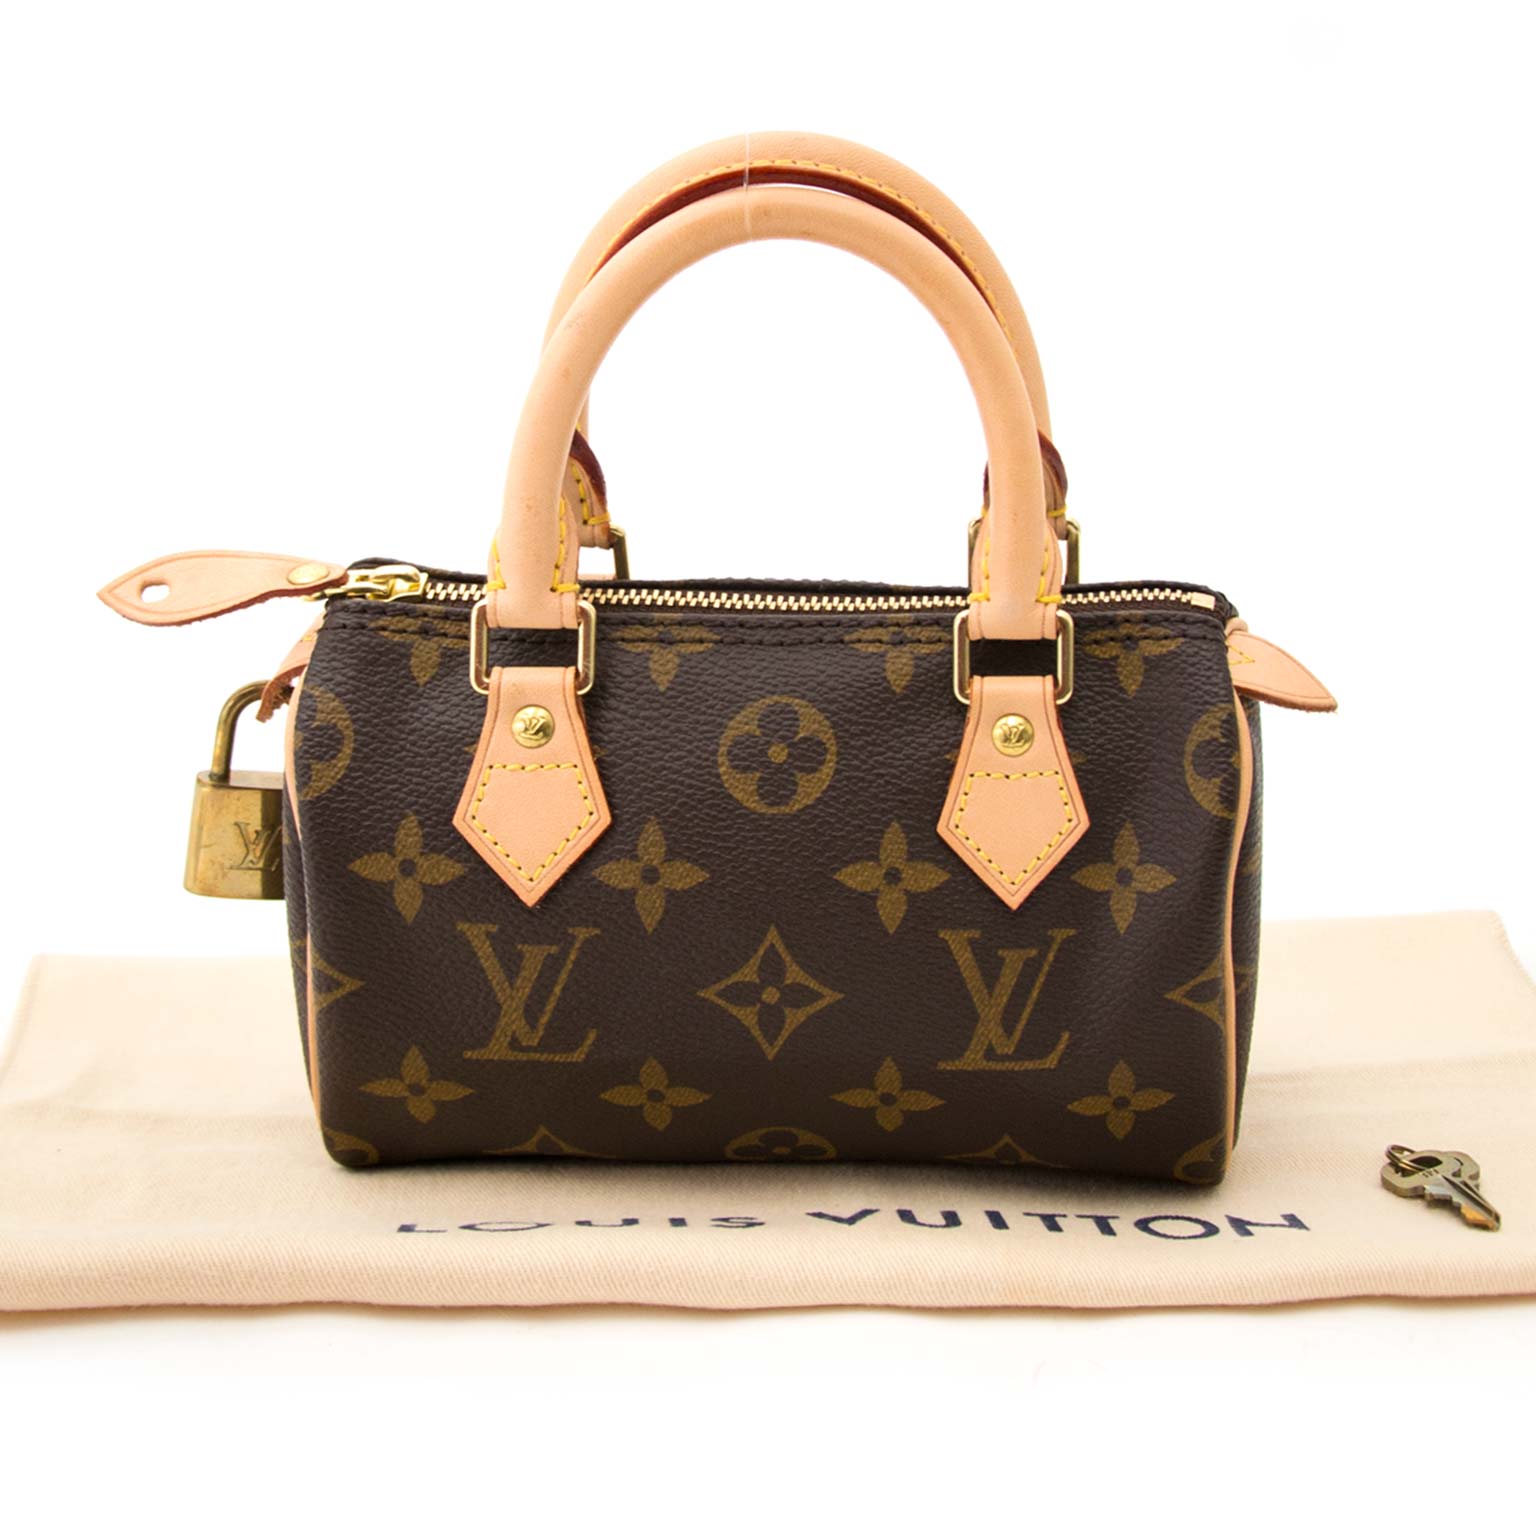 Louis Vuitton Half-Moon Mini Bag now on SALE ✨✨🎉 GET IT NOW FOR